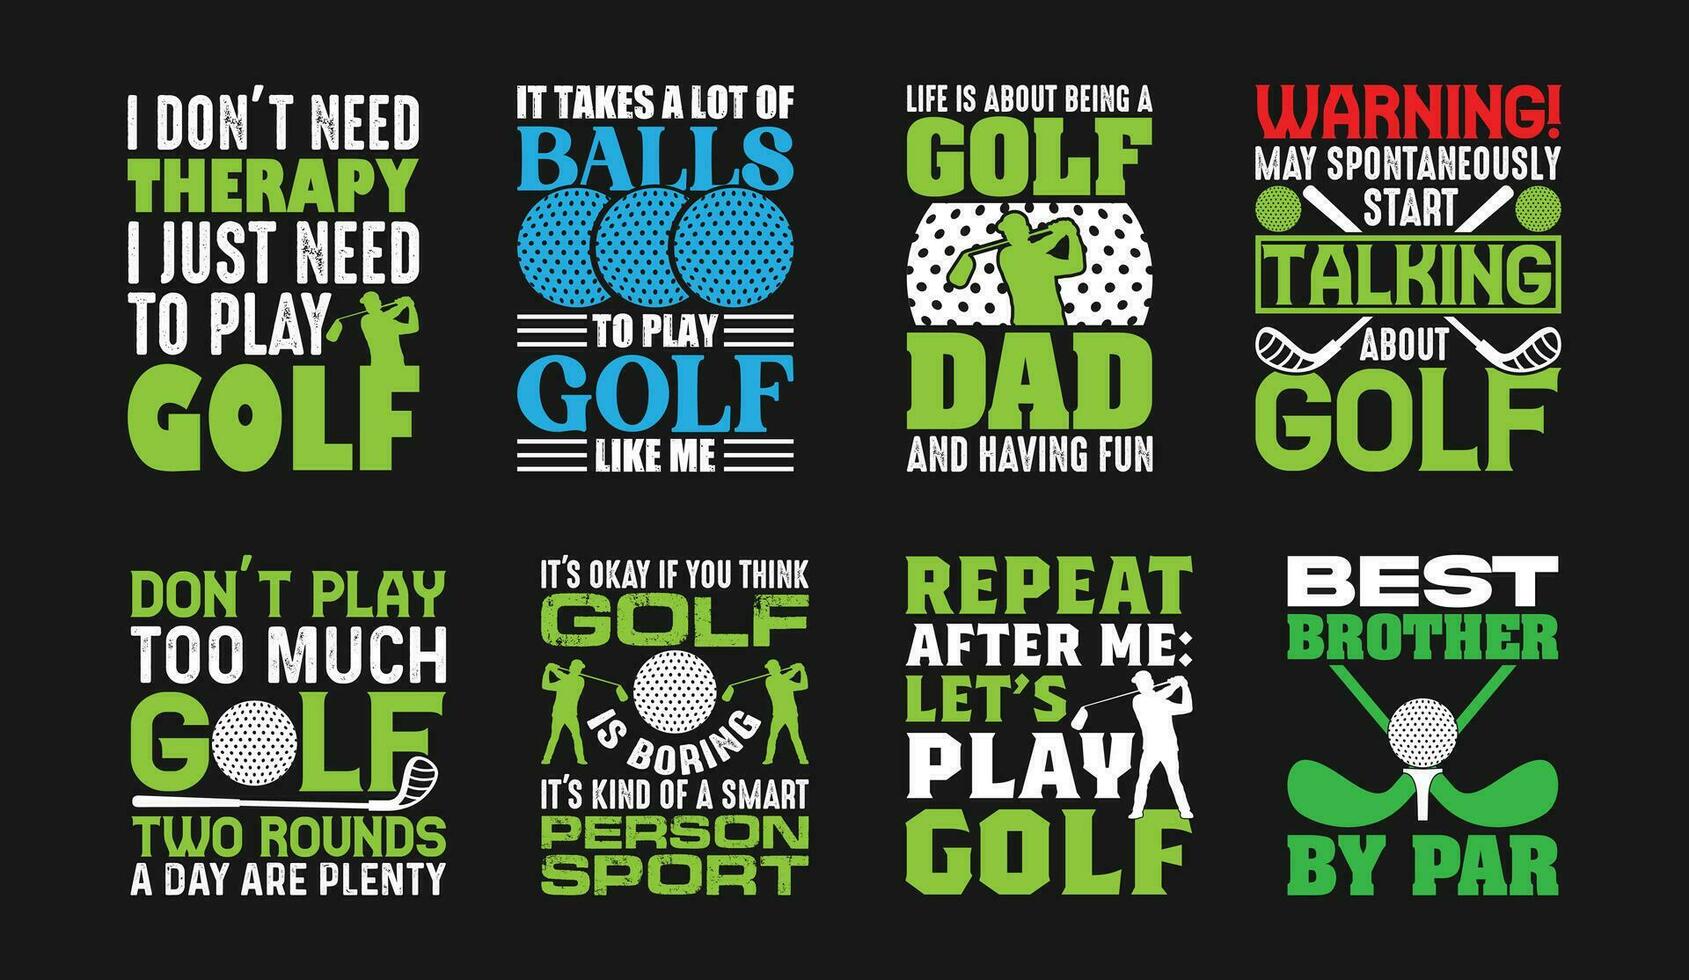 golfe t camisa Projeto pacote, vetor golfe t camisa projeto, golfe camisa, golfe tipografia t camisa Projeto coleção